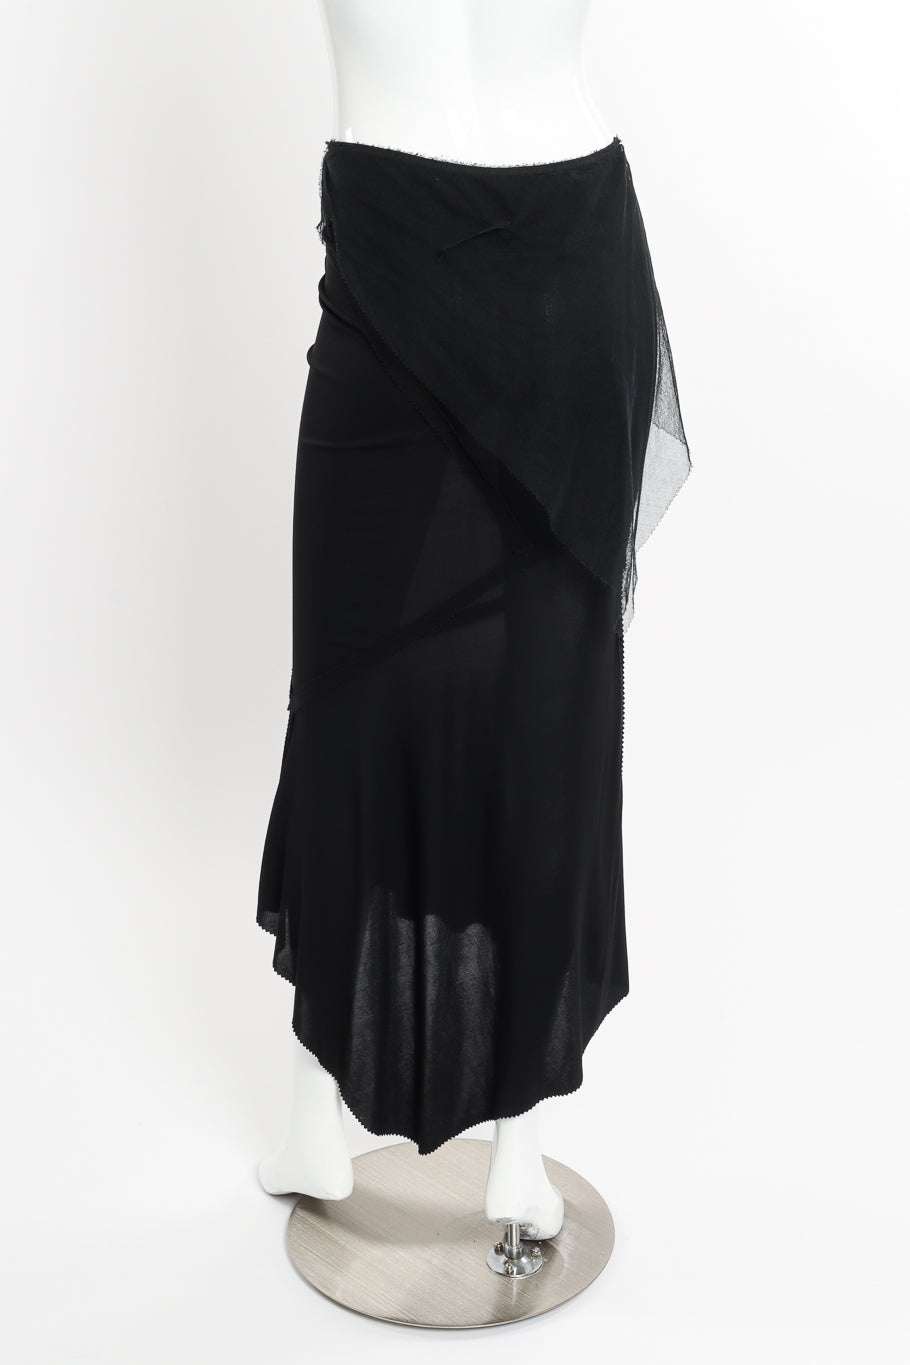 Jean Paul Gaultier Femme Mesh Overlay Ruffle Skirt back on mannequin @recessla